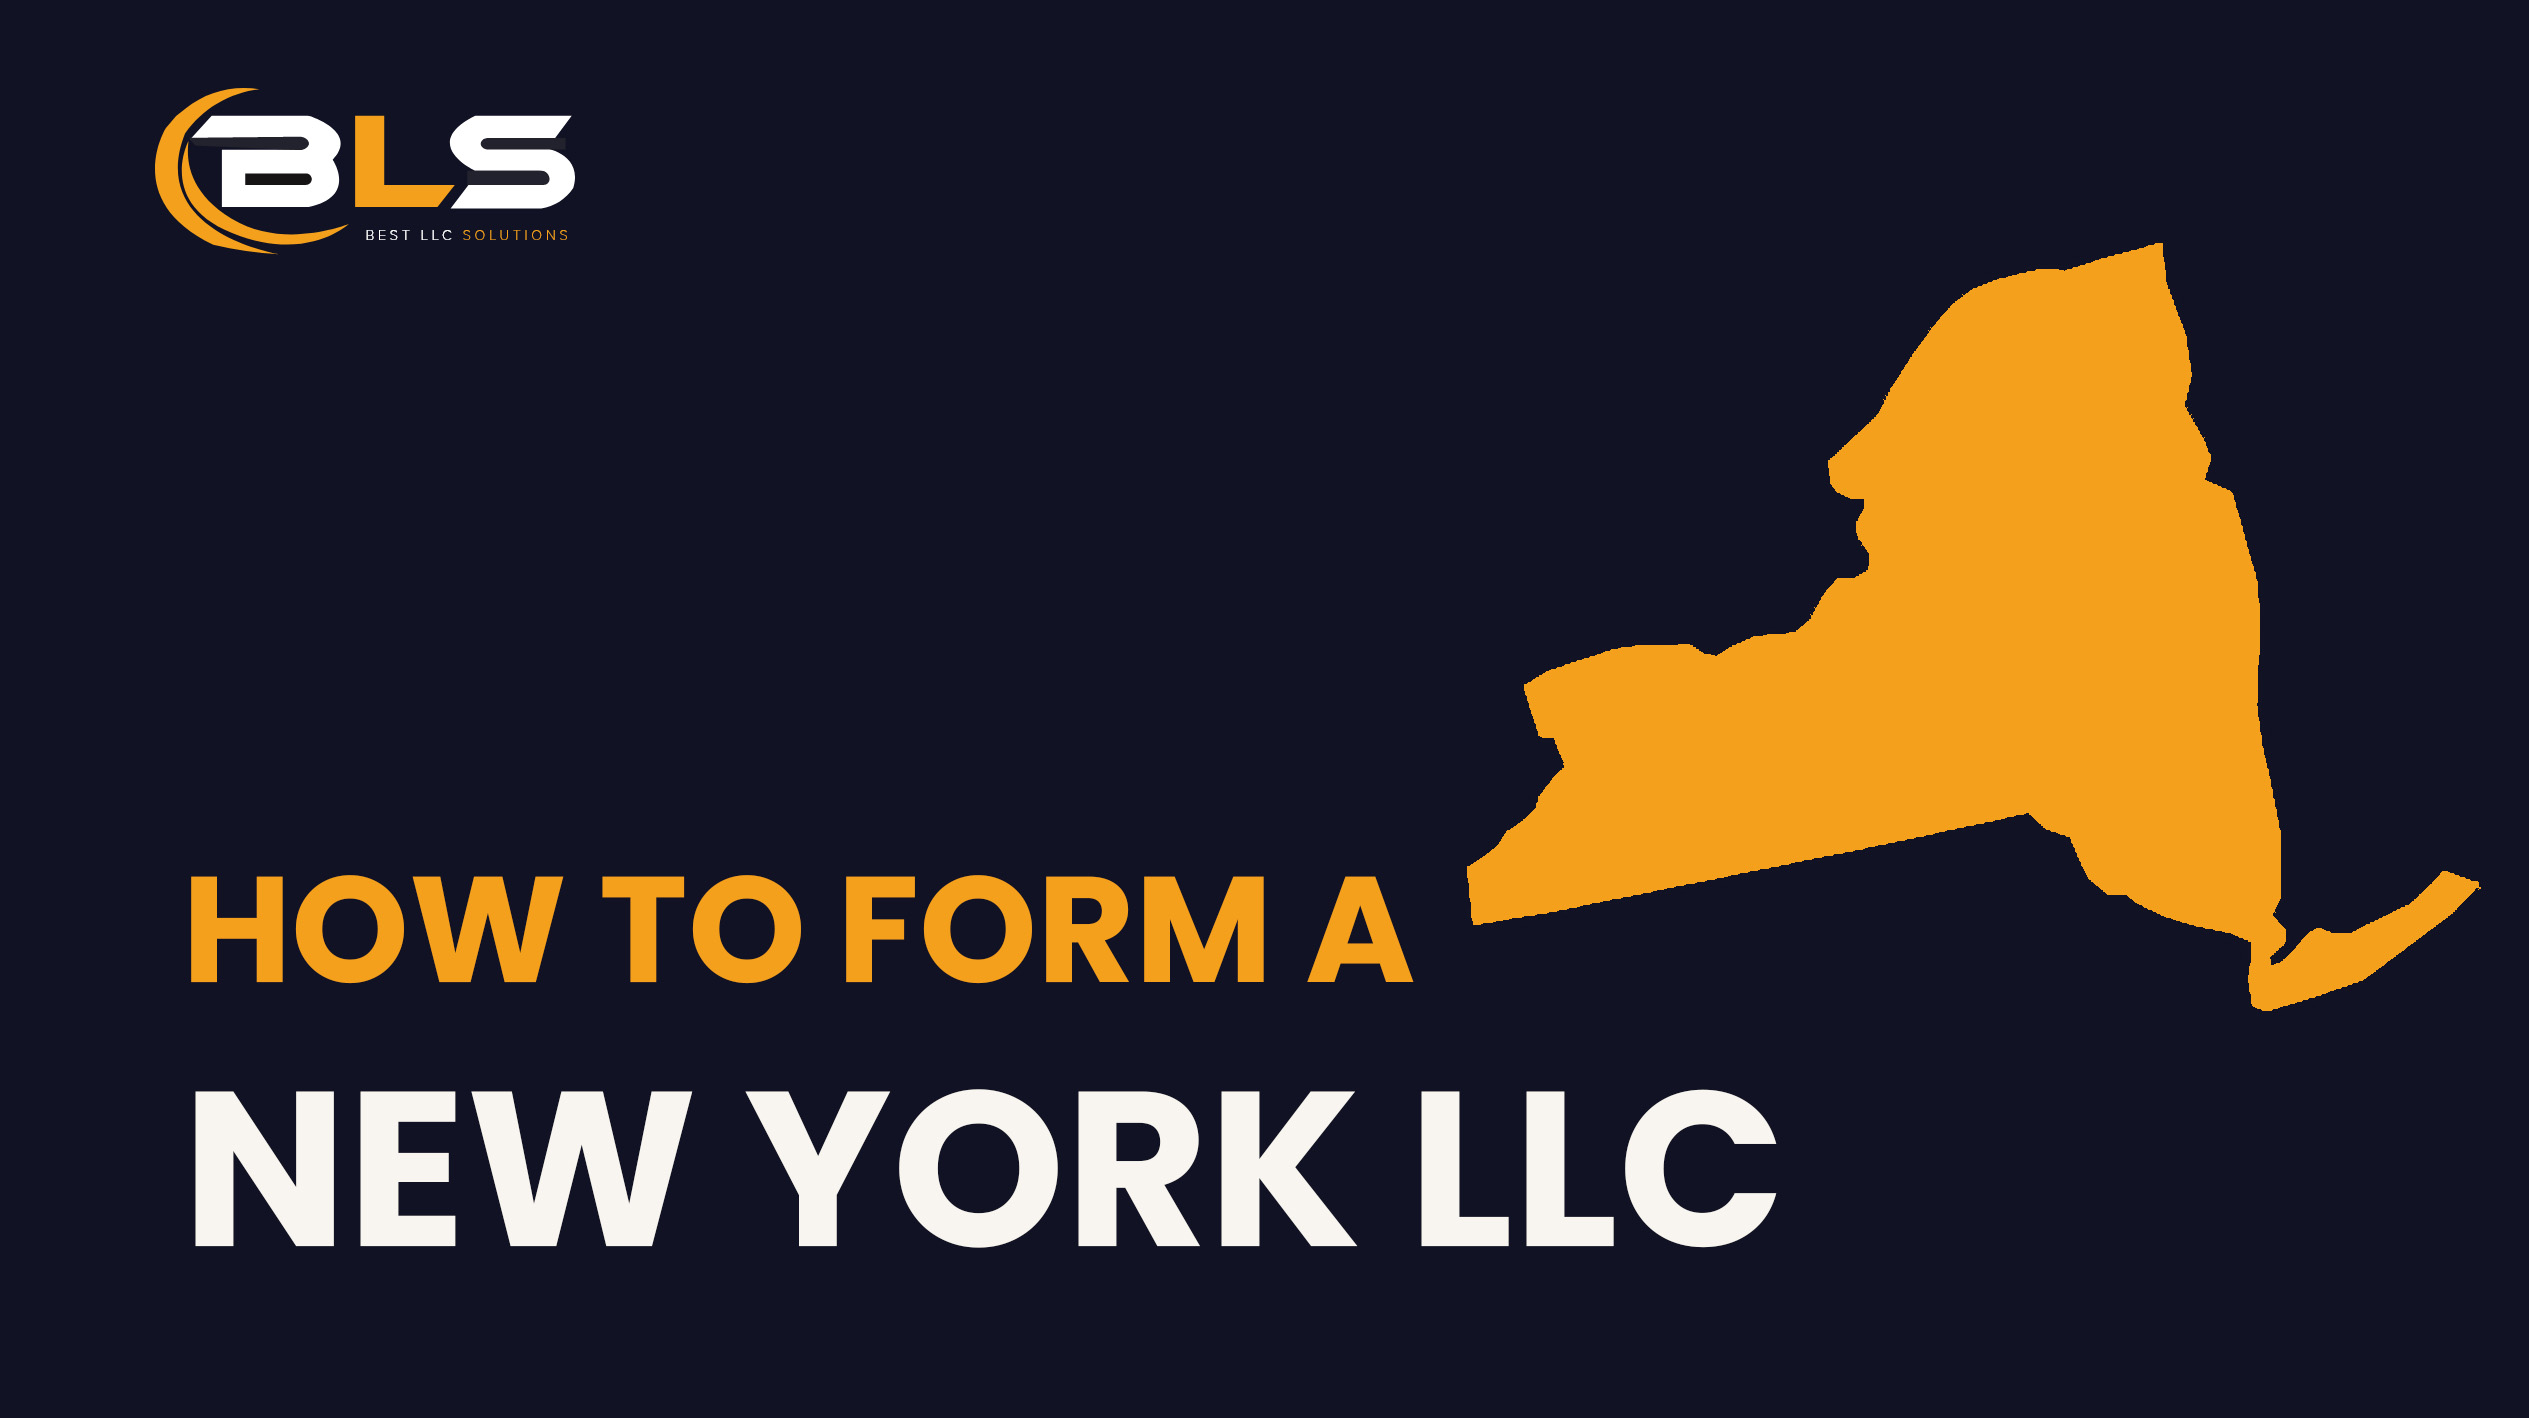 New York LLC